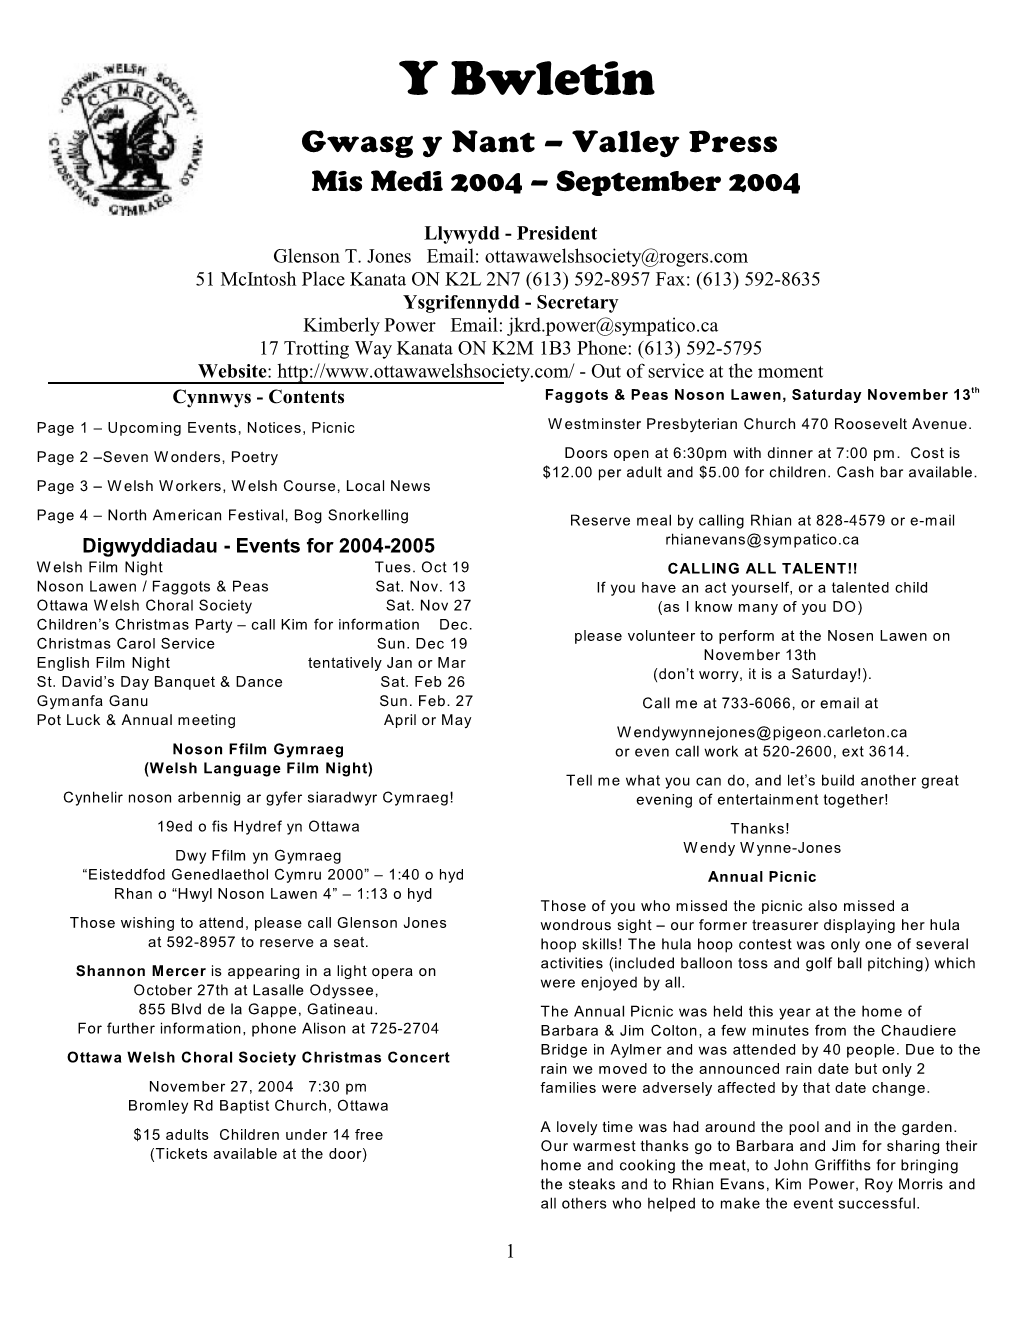 Y Bwletin Gwasg Y Nant – Valley Press Mis Medi 2004 – September 2004